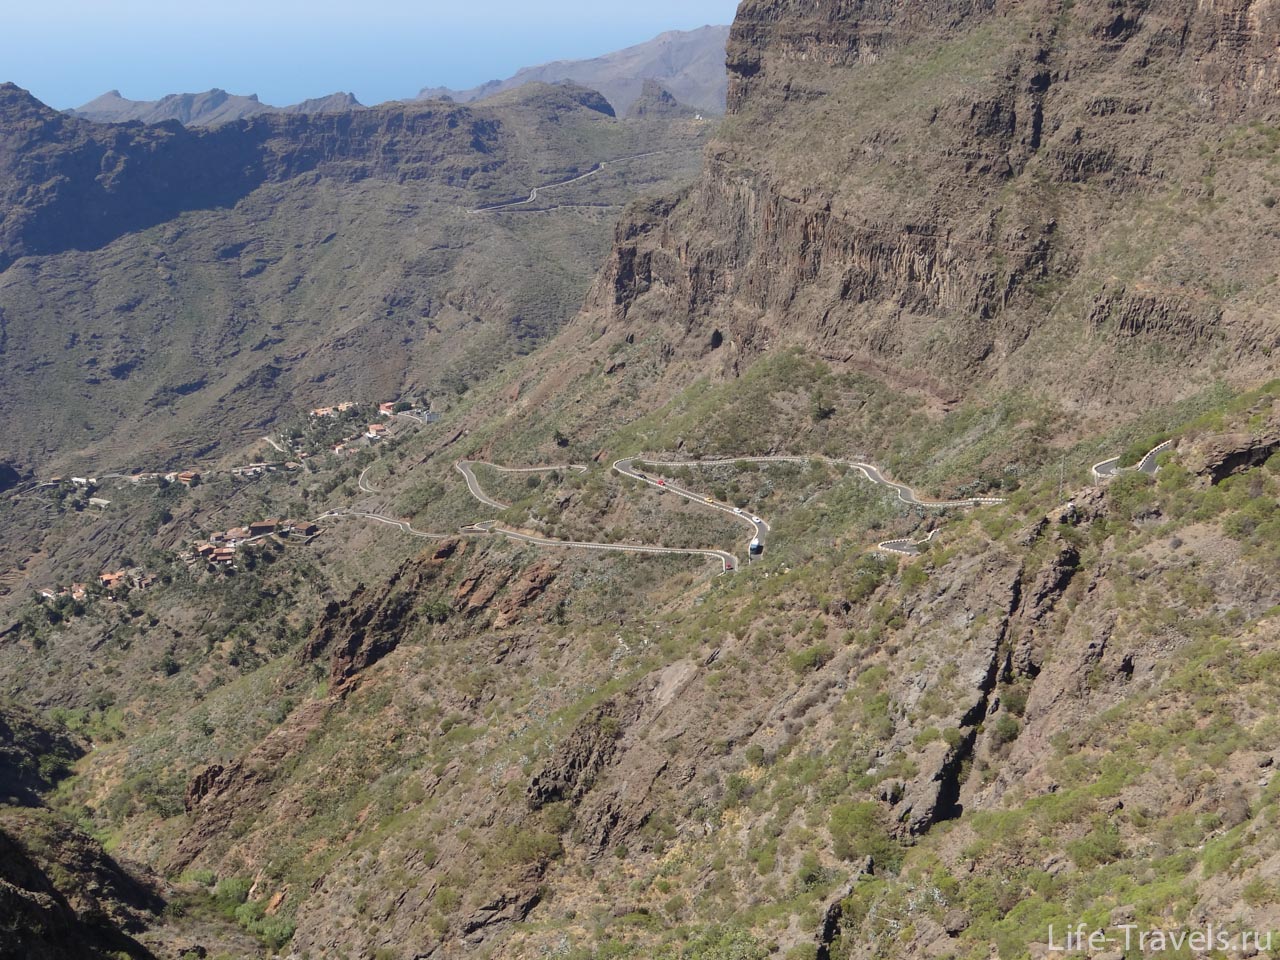 Serpentine Road to Masca Tenerife